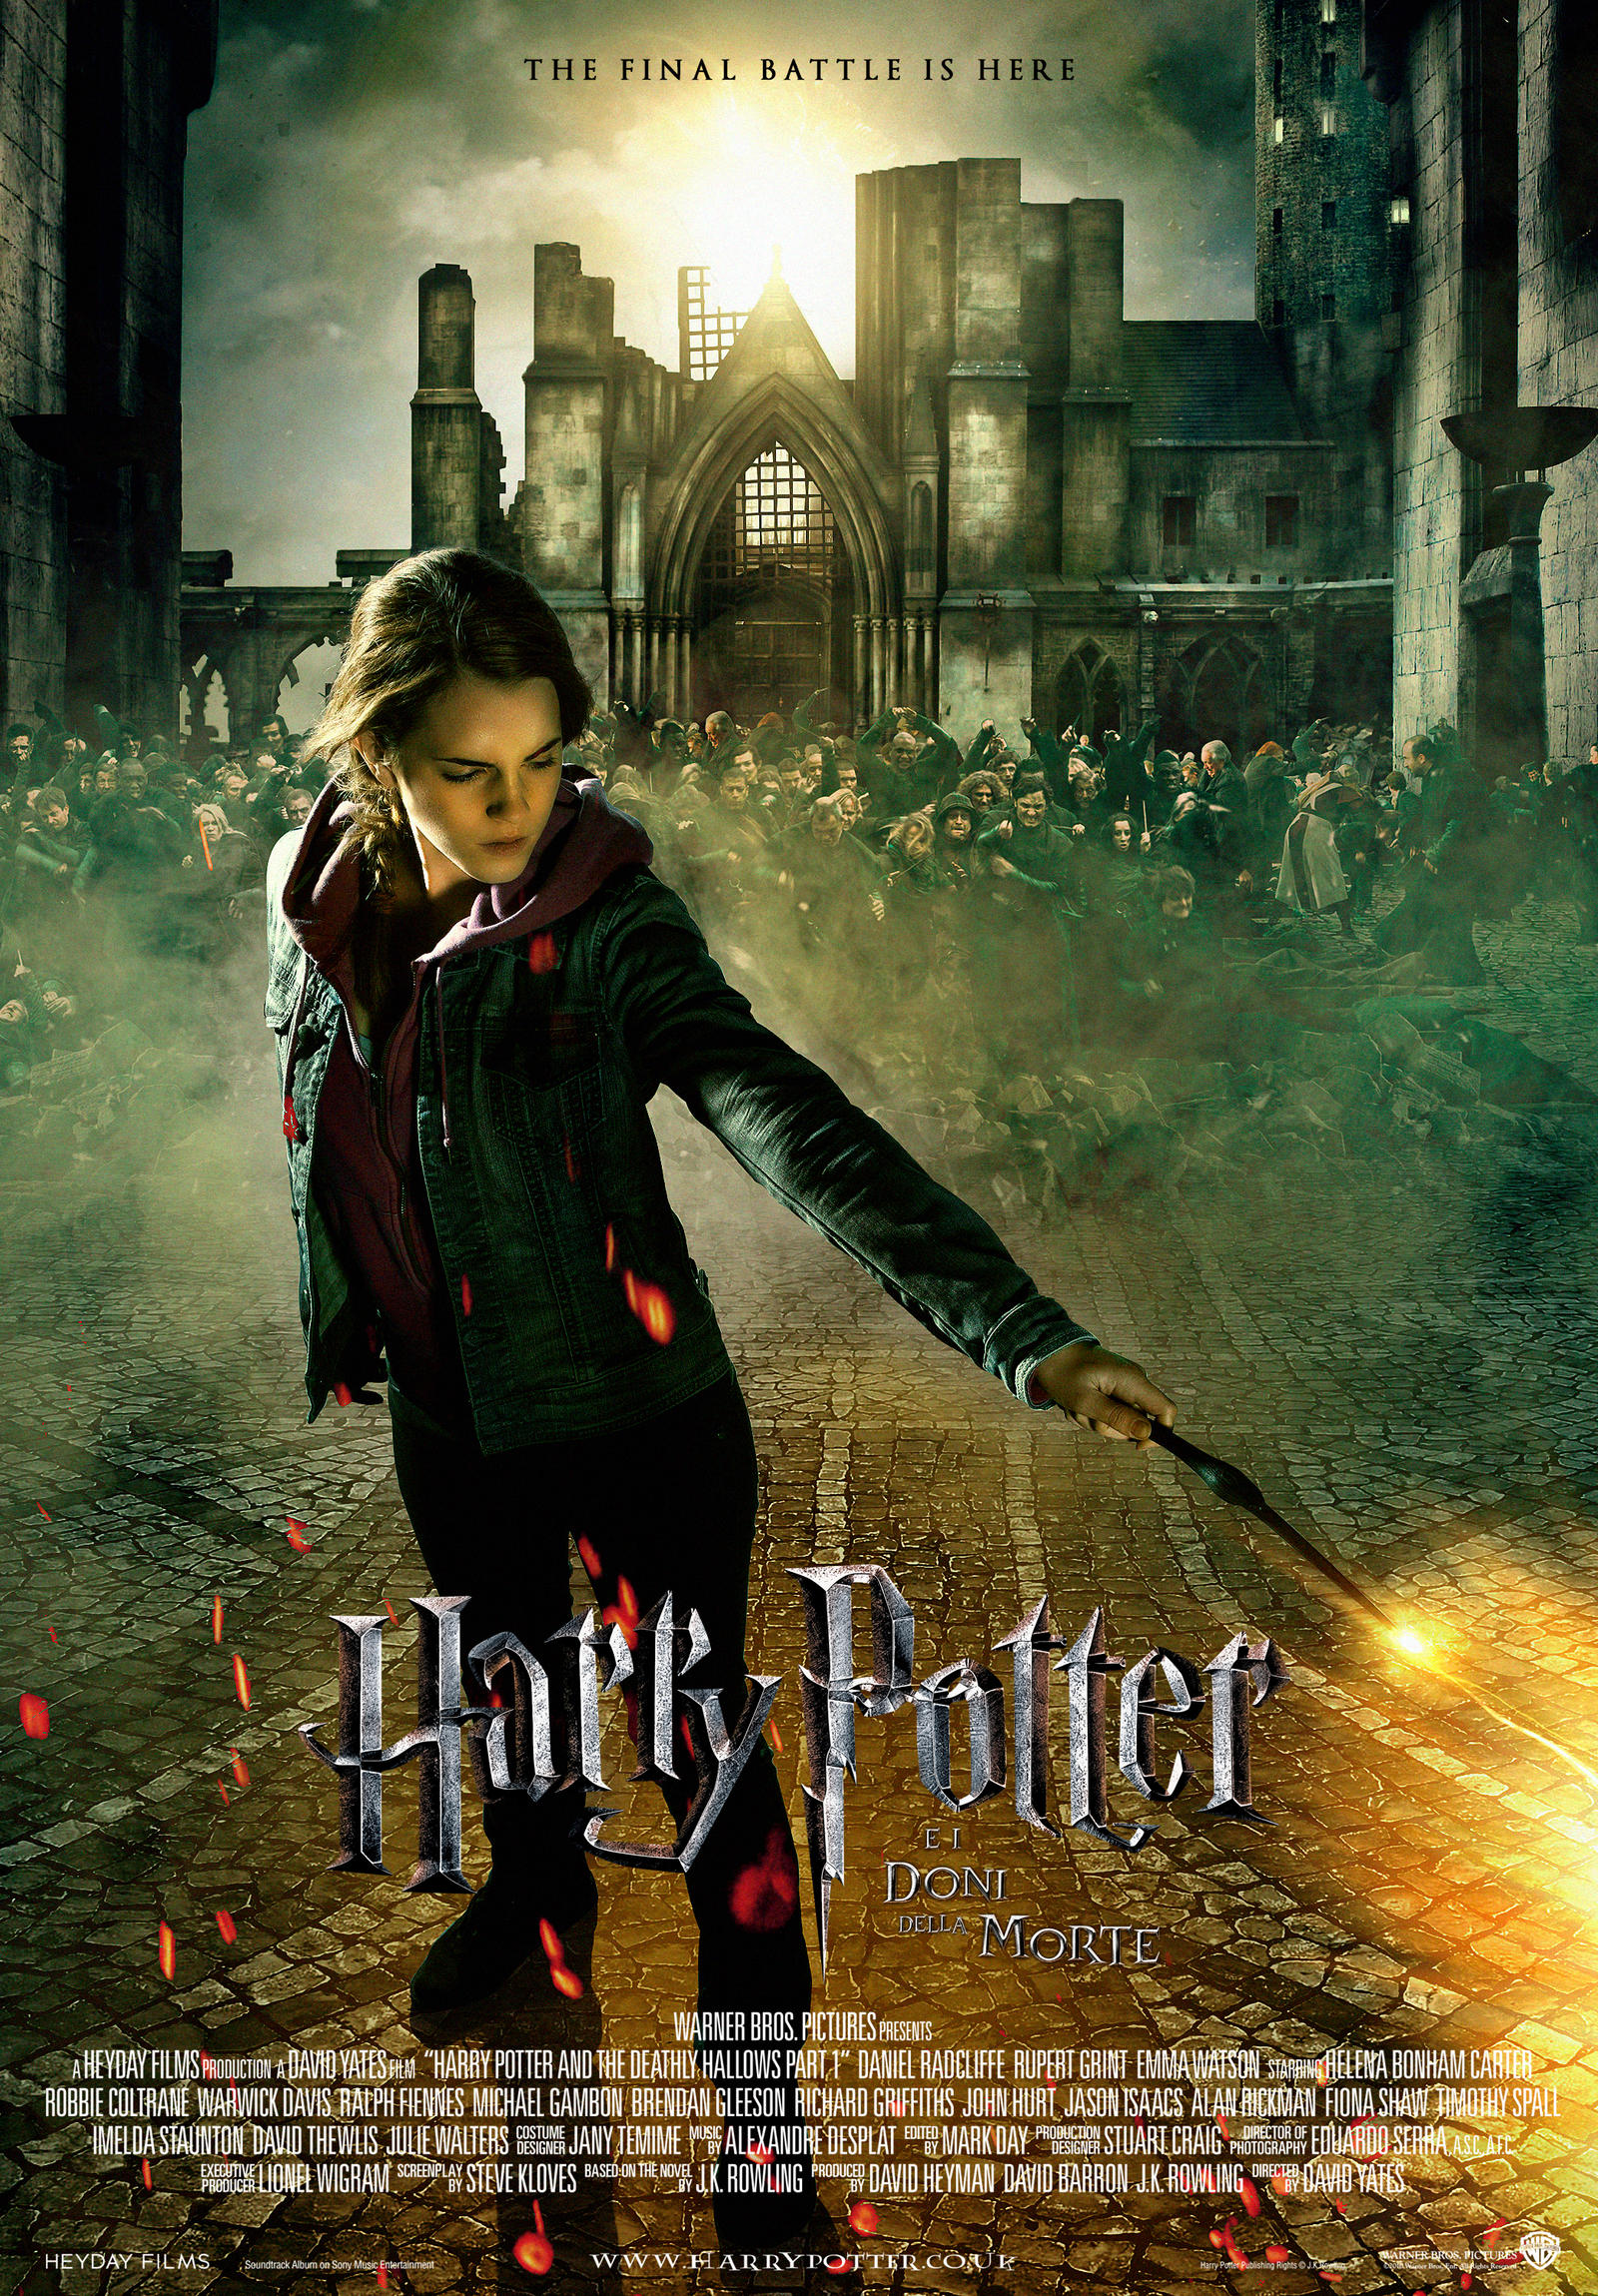 Fantasy Poster - Harry Potter 7 with Hermione by HogwartSite on DeviantArt